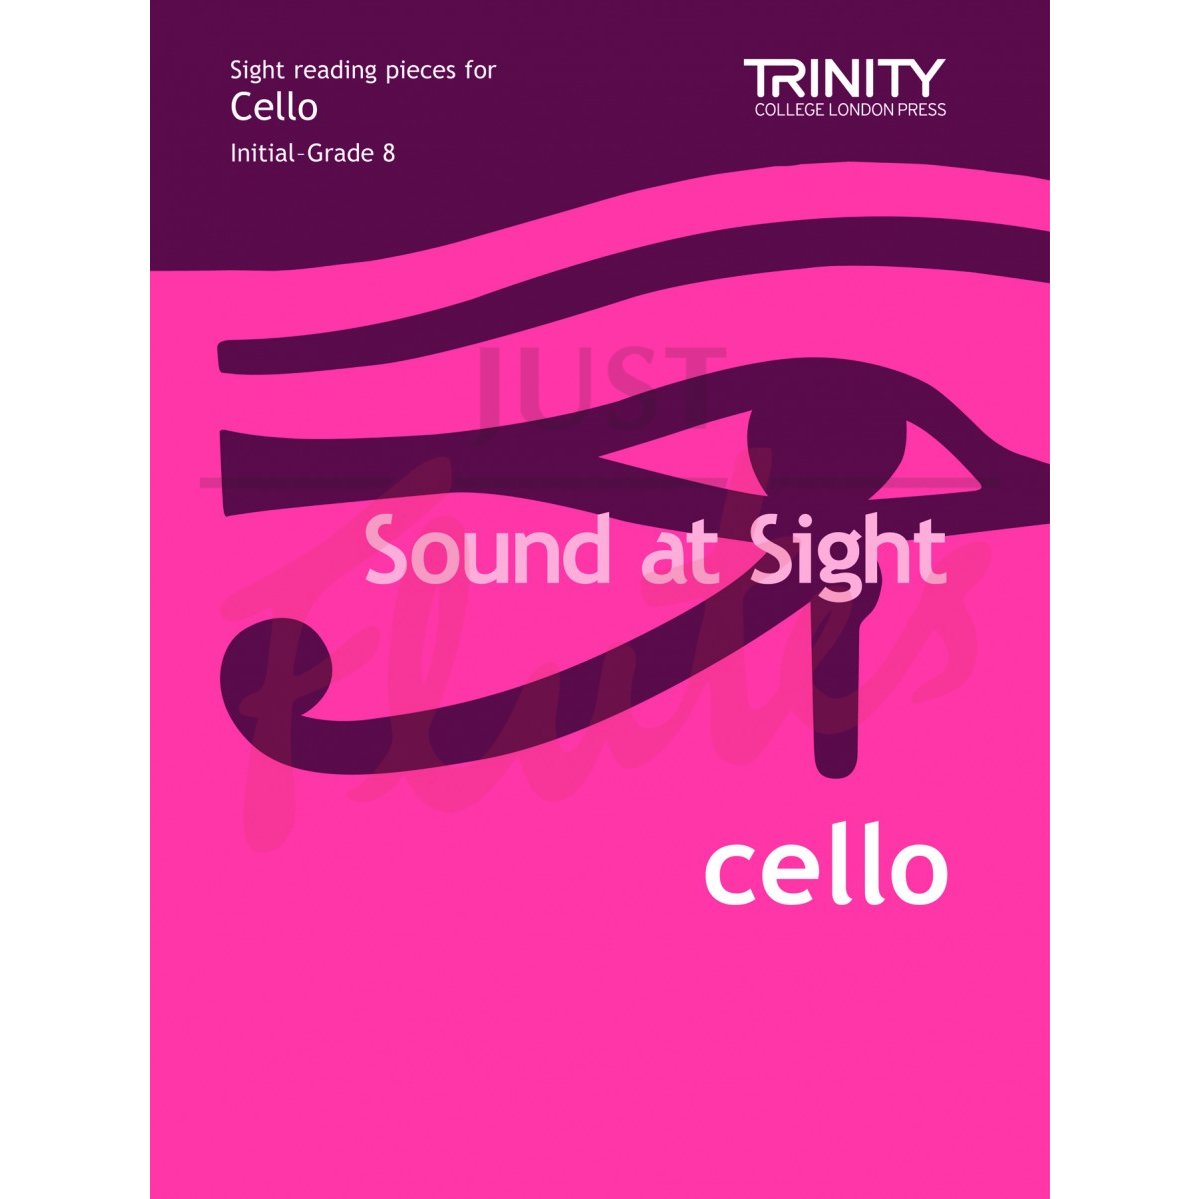 Sound at Sight Cello Initial-Grade 8